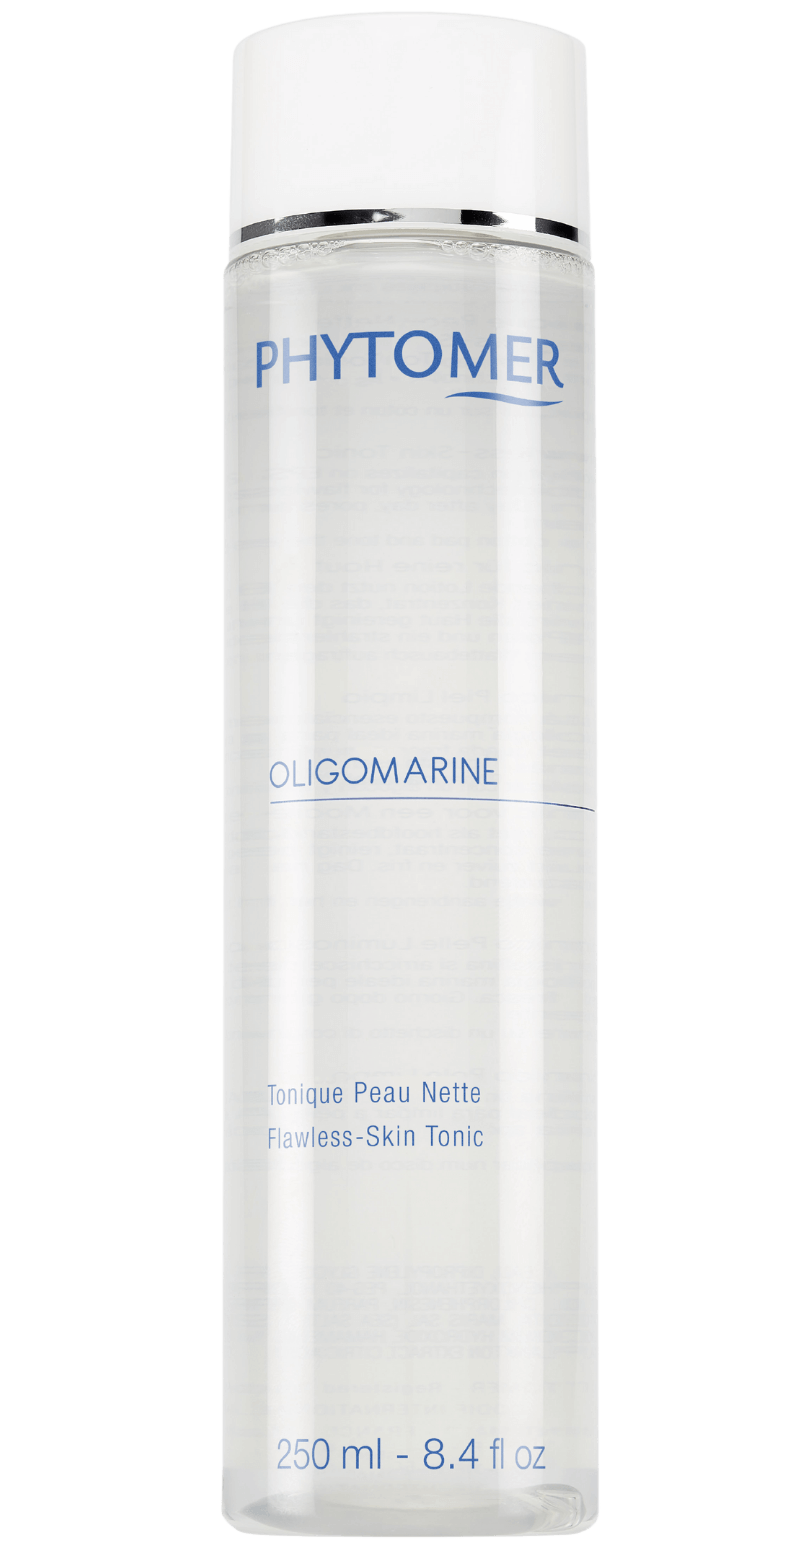 &#39;s Phytomer OLIGOMARINE Flawless-Skin Tonic - Bellini&#39;s Skin and Parfumerie 